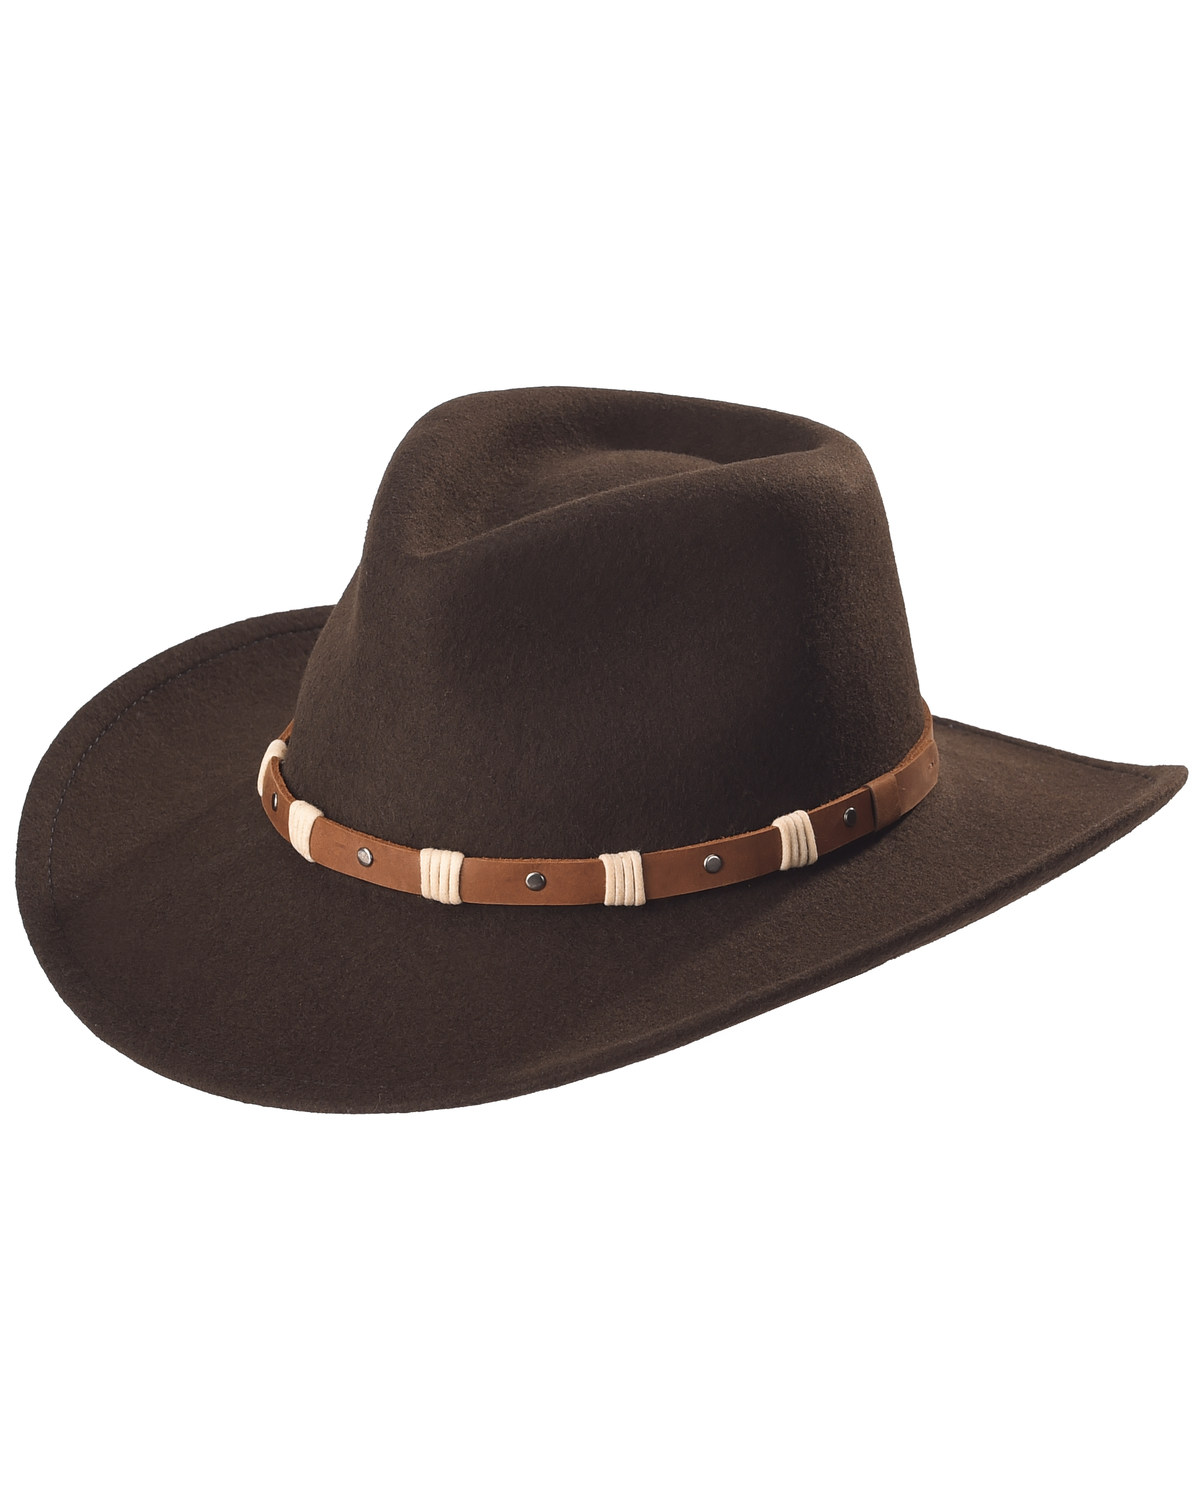 Black Creek Men's Cordova Crushable Wool Felt Hat